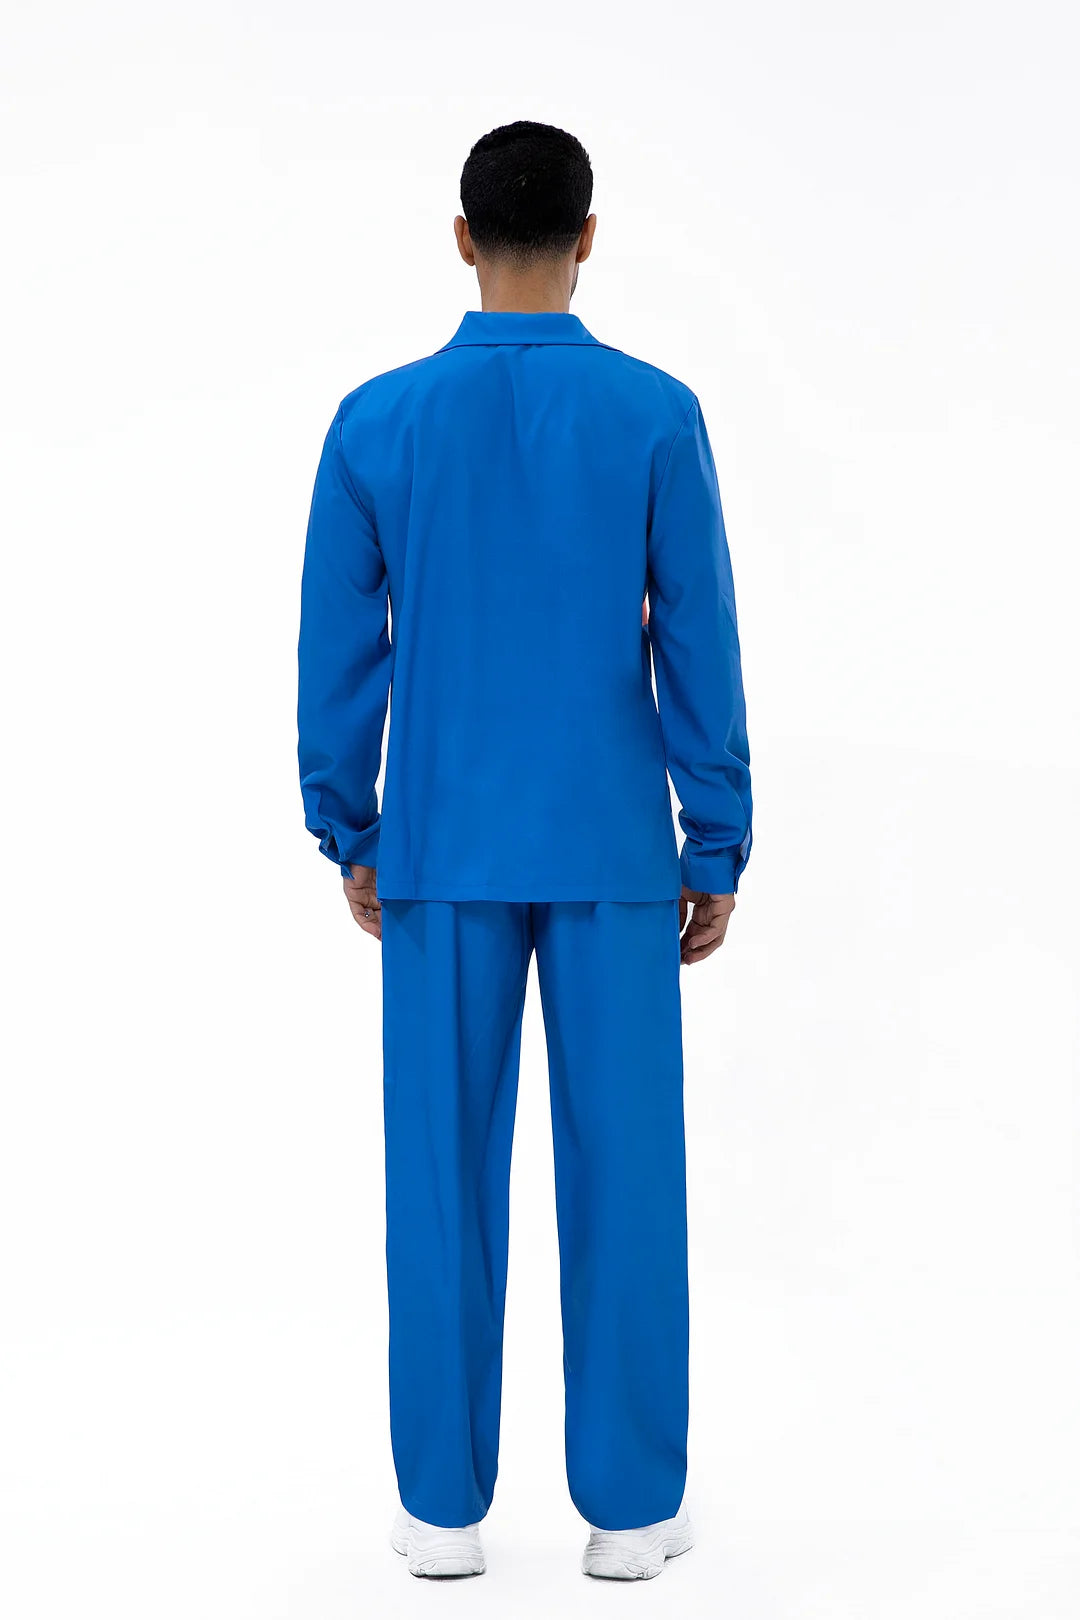 Navy Geometric Print Walking Suit 2 Piece Long Sleeve Set